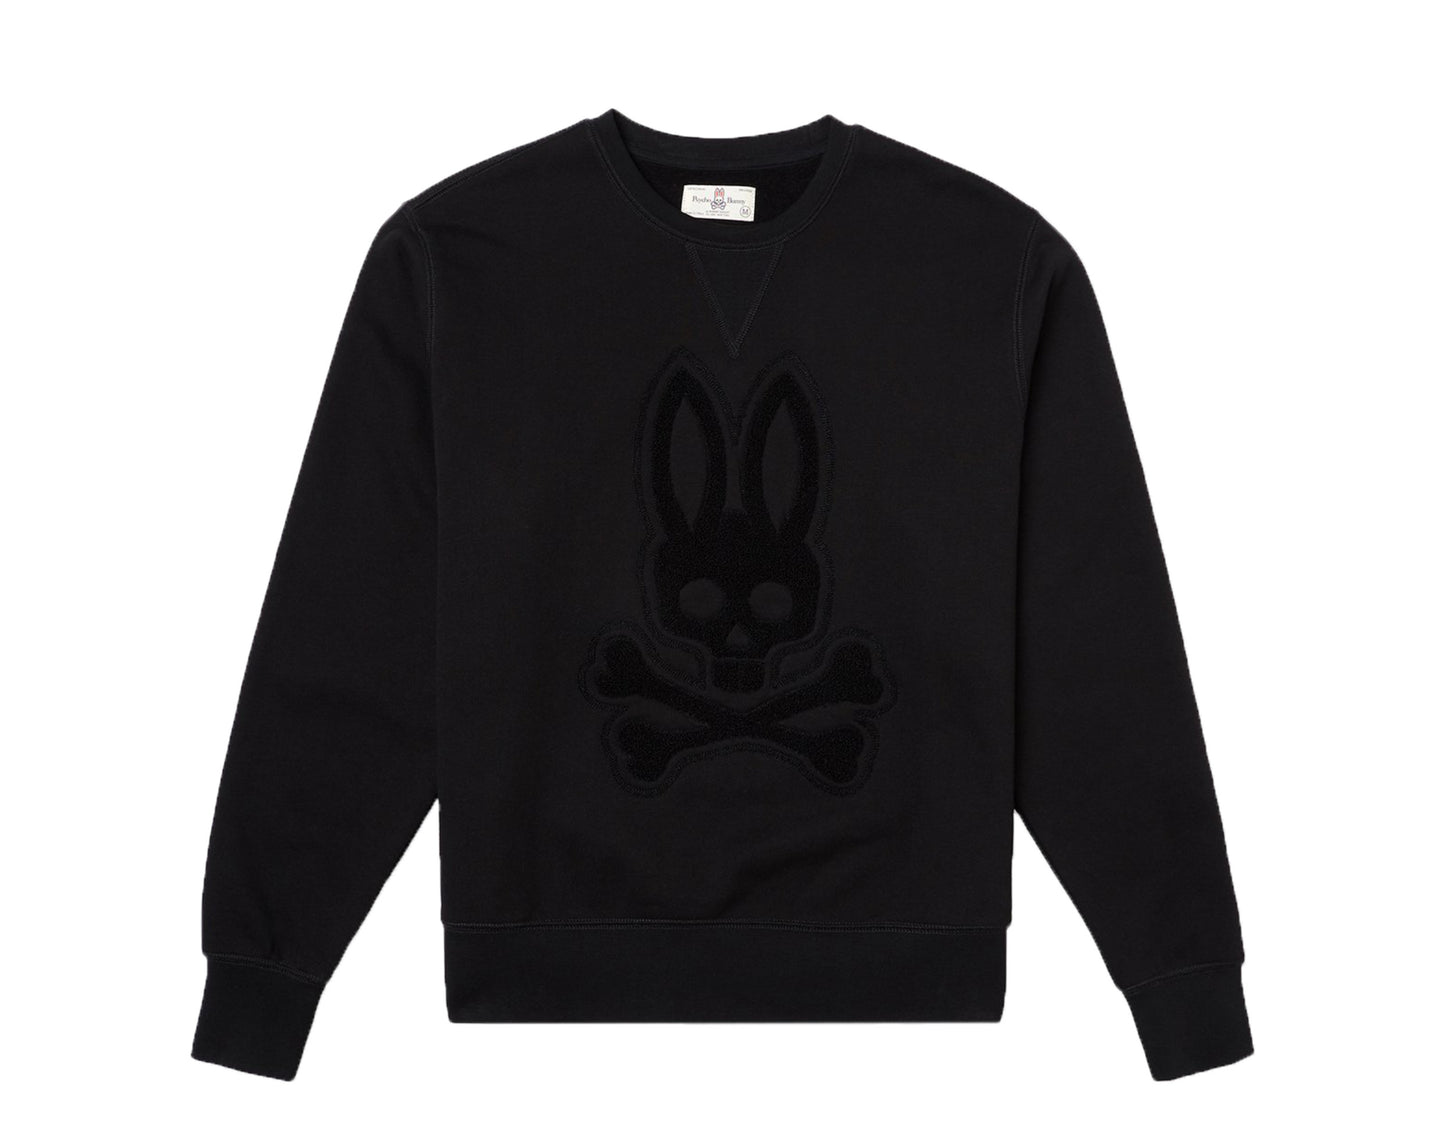 Psycho Bunny Loop Embroidered Logo Black Men's Sweatshirt B6S787B1FL-BLK